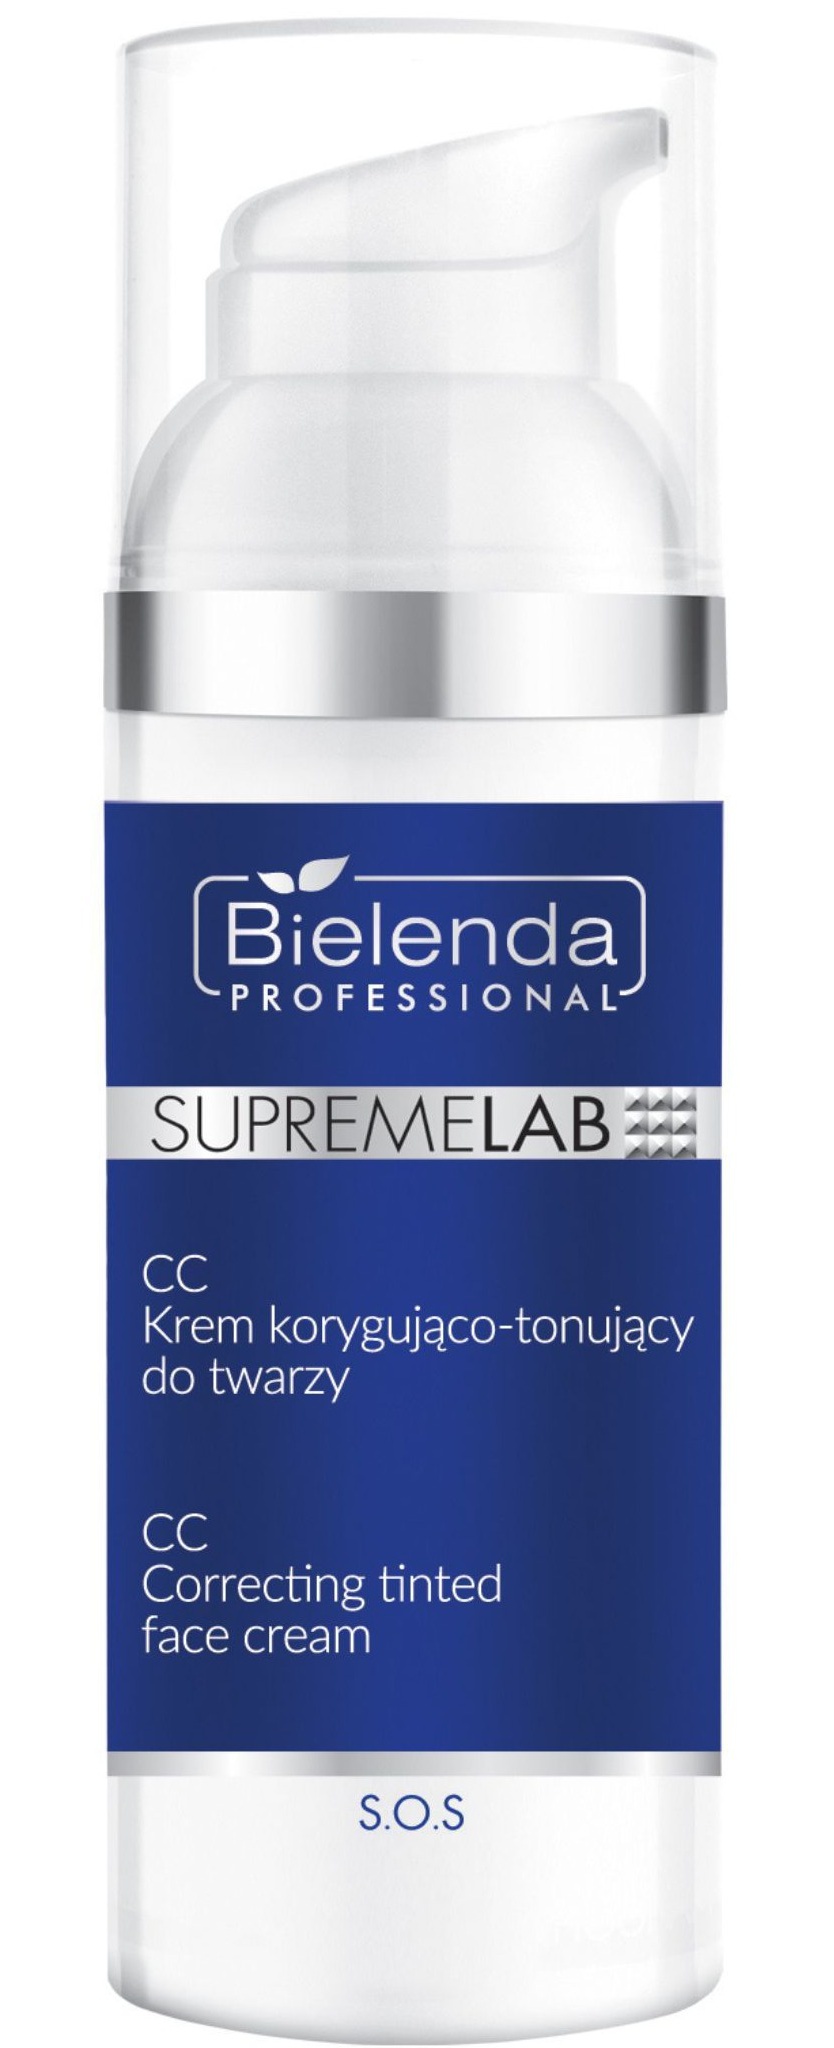 Bielenda Professional Supremelab SOS CC Correcting Tinted Face Cream